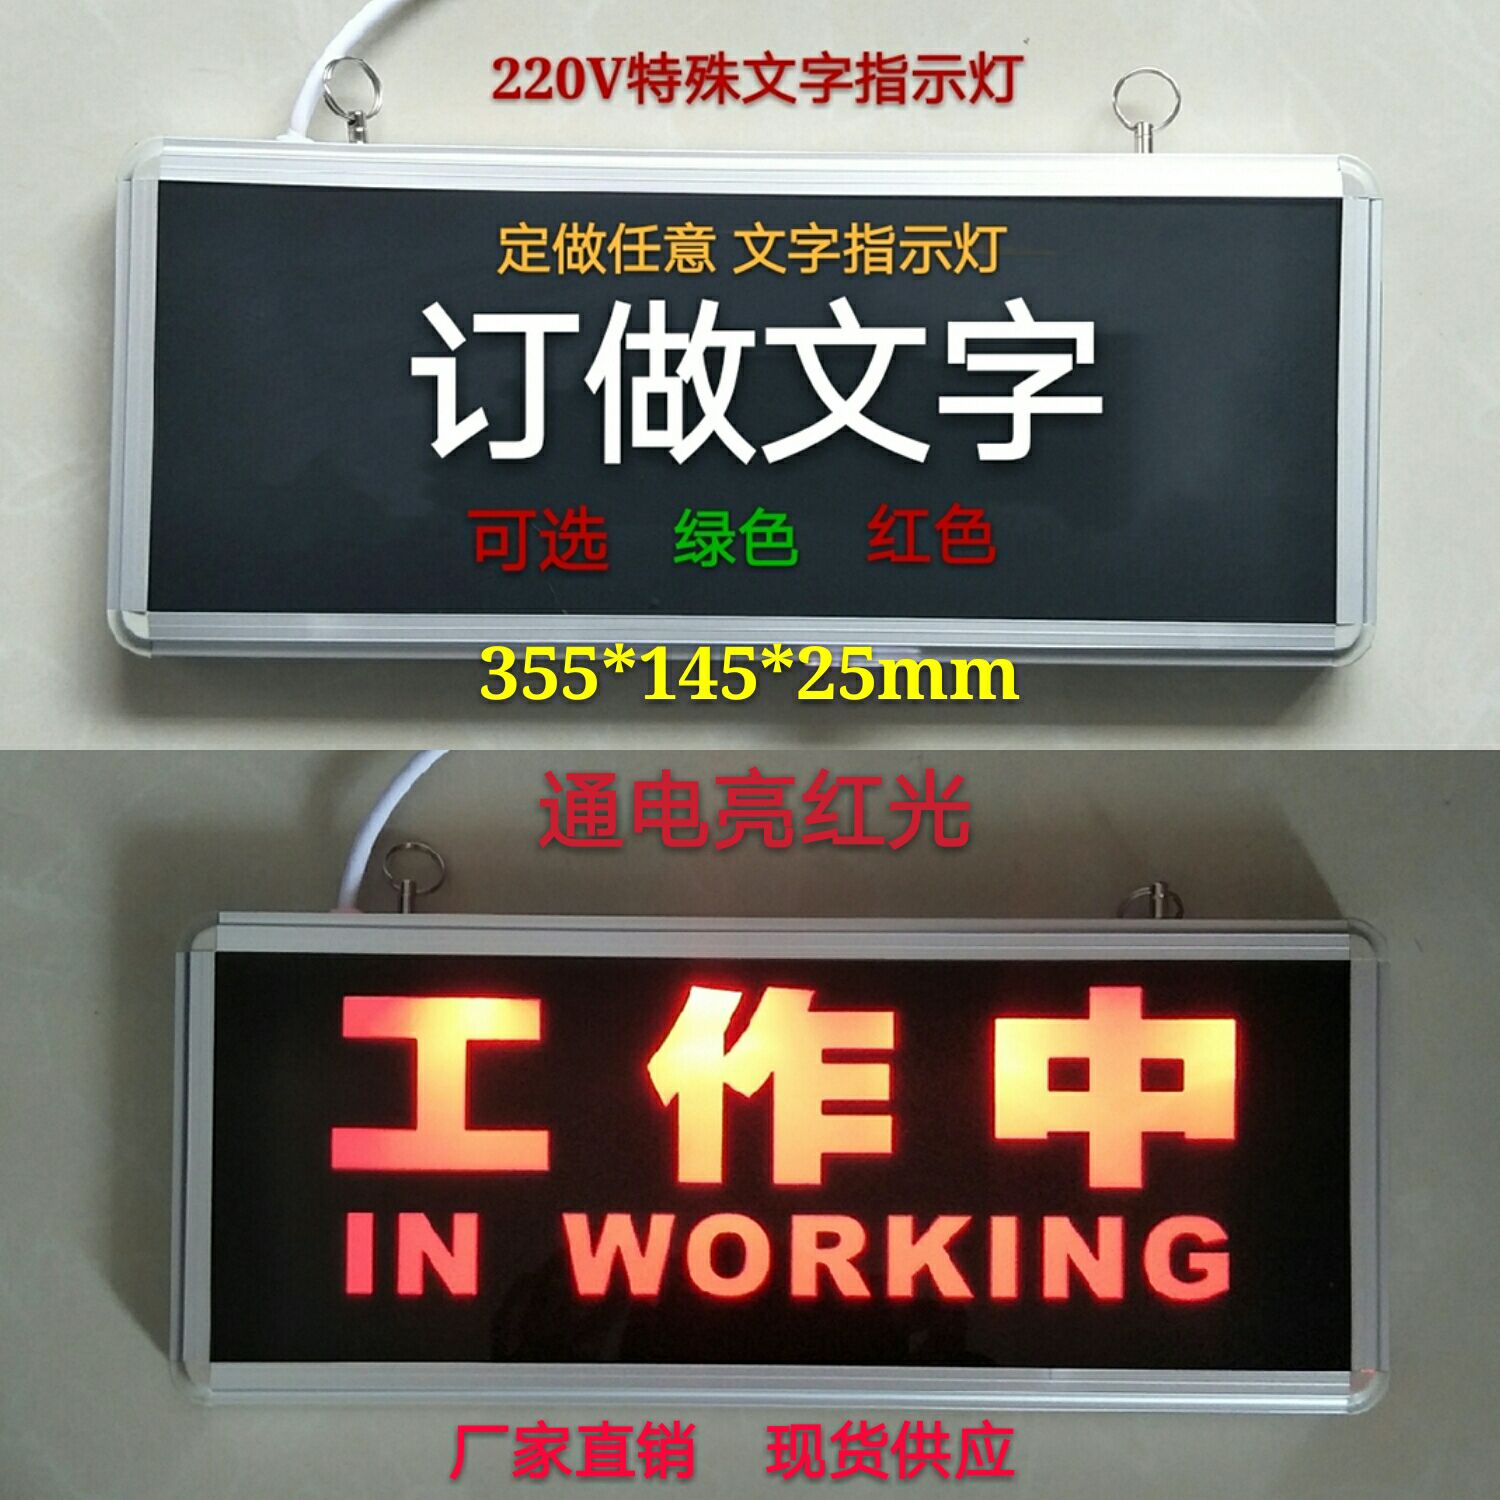 220v24V工作中状态指示灯定制做文字机房设备房消毒中指示牌带灯